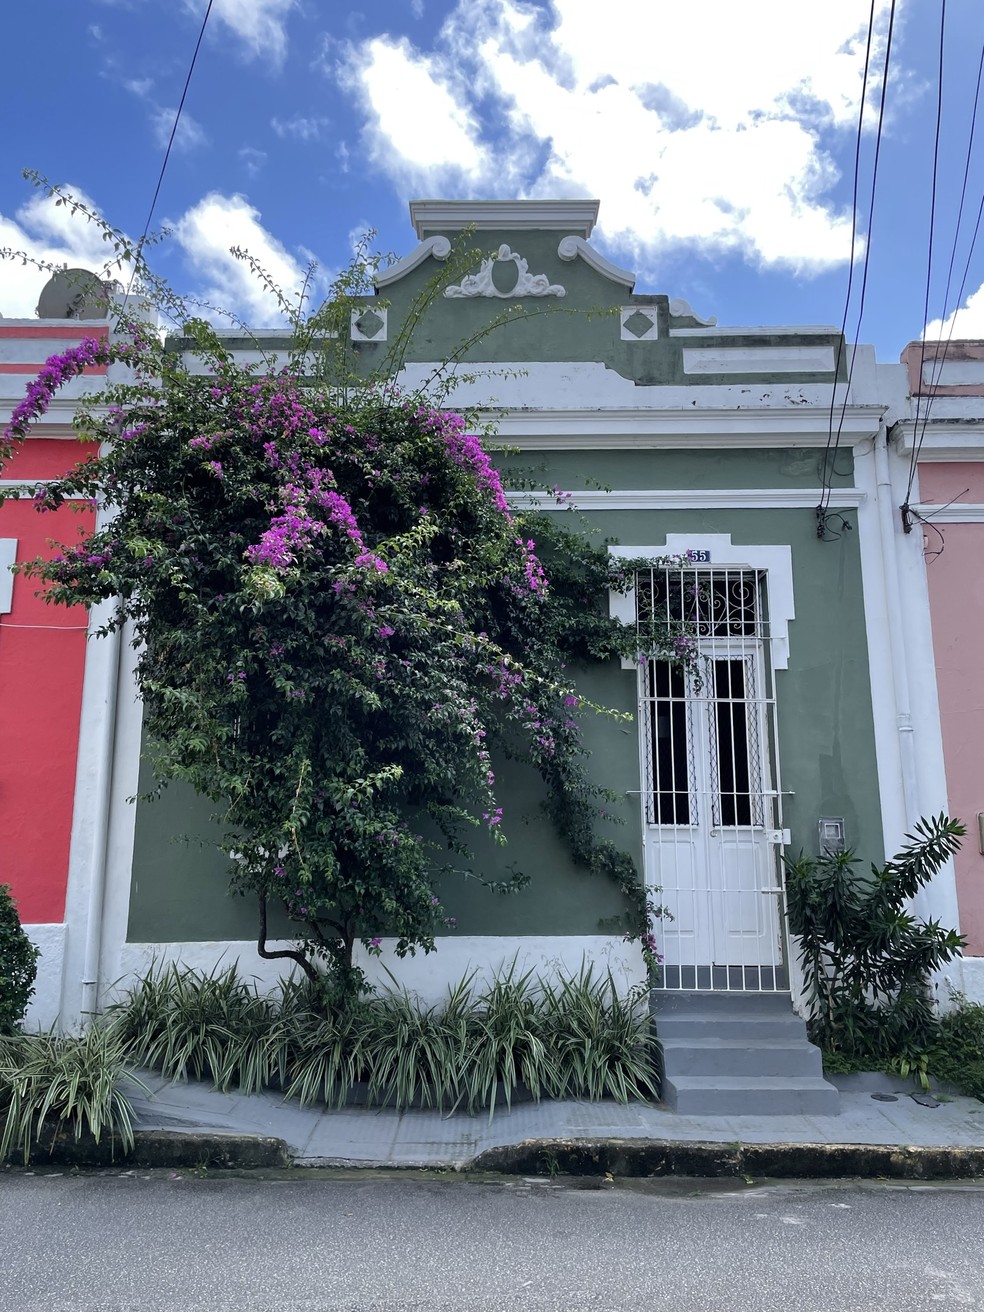 A fachada restaurada da casa — Foto: Karla Burlamaqui